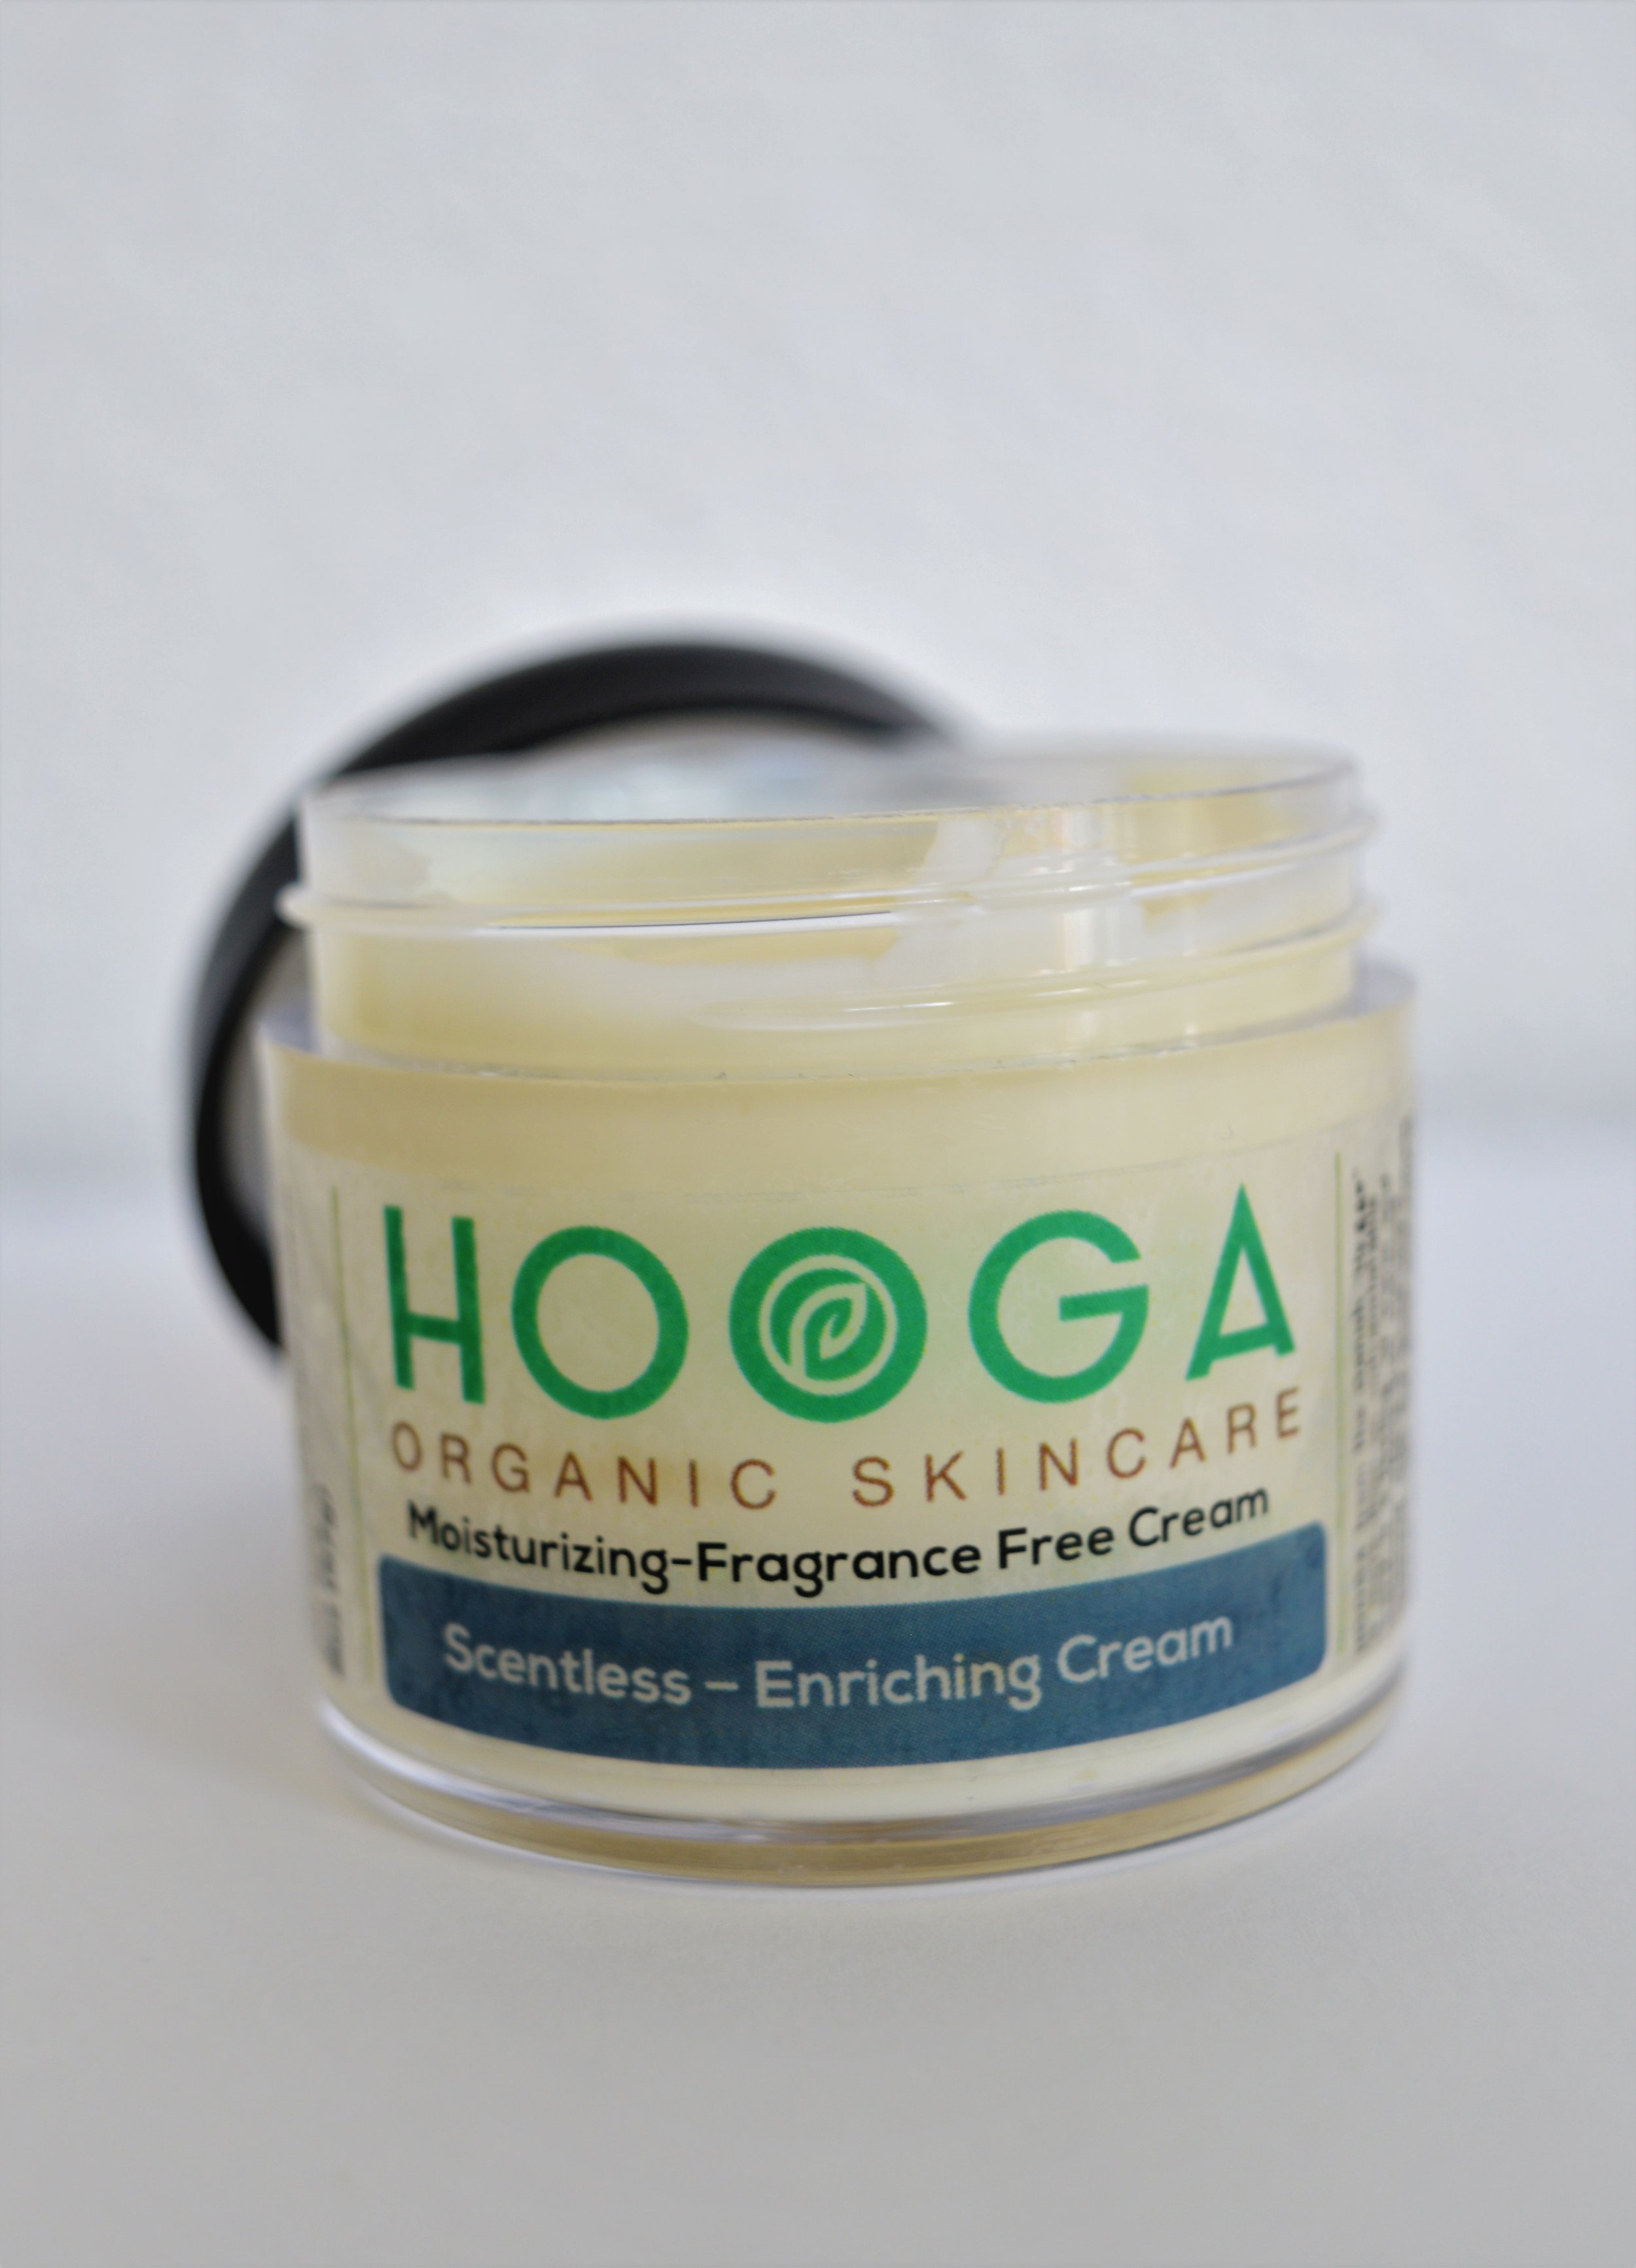 Fragrance free cream - Scentless.jpg